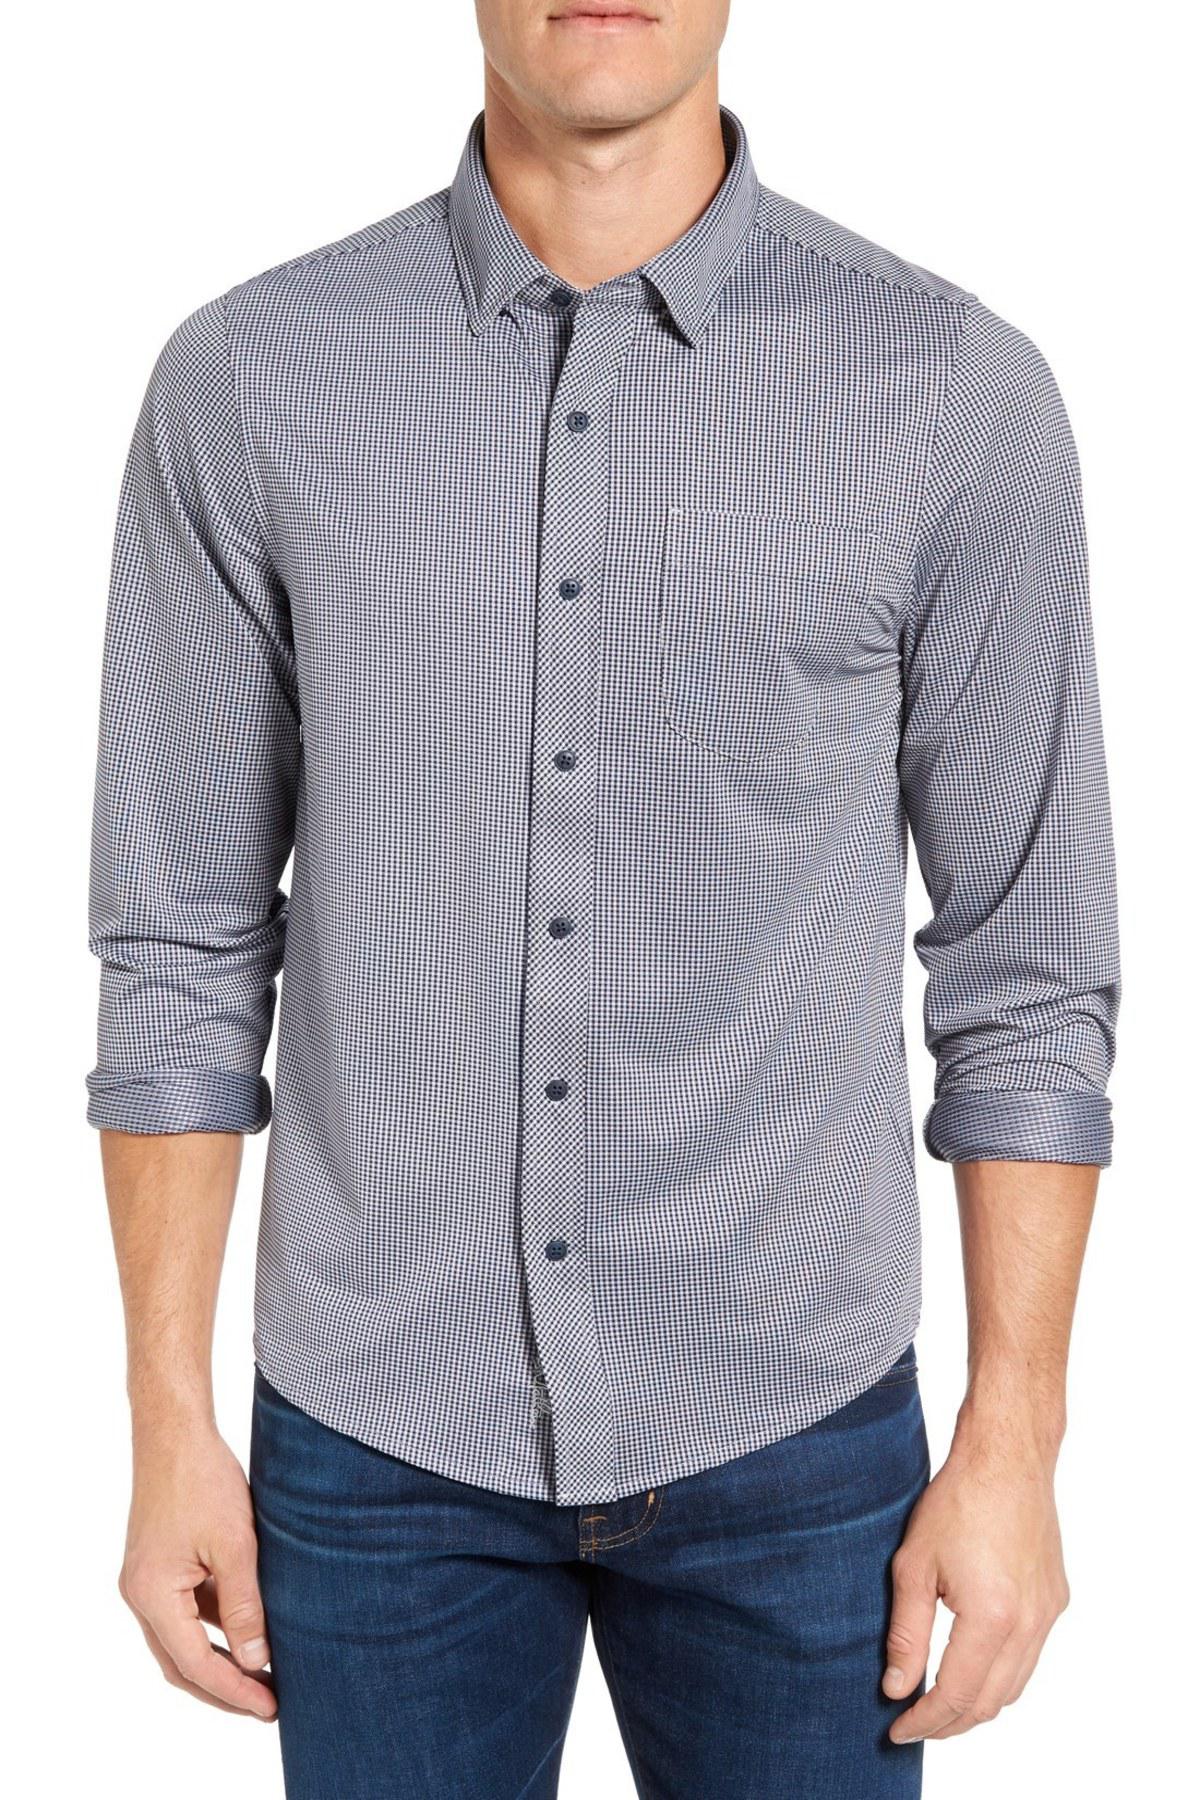 Travis Mathew Synthetic Ullman Long Sleeve Button Down Shirt in Gray ...